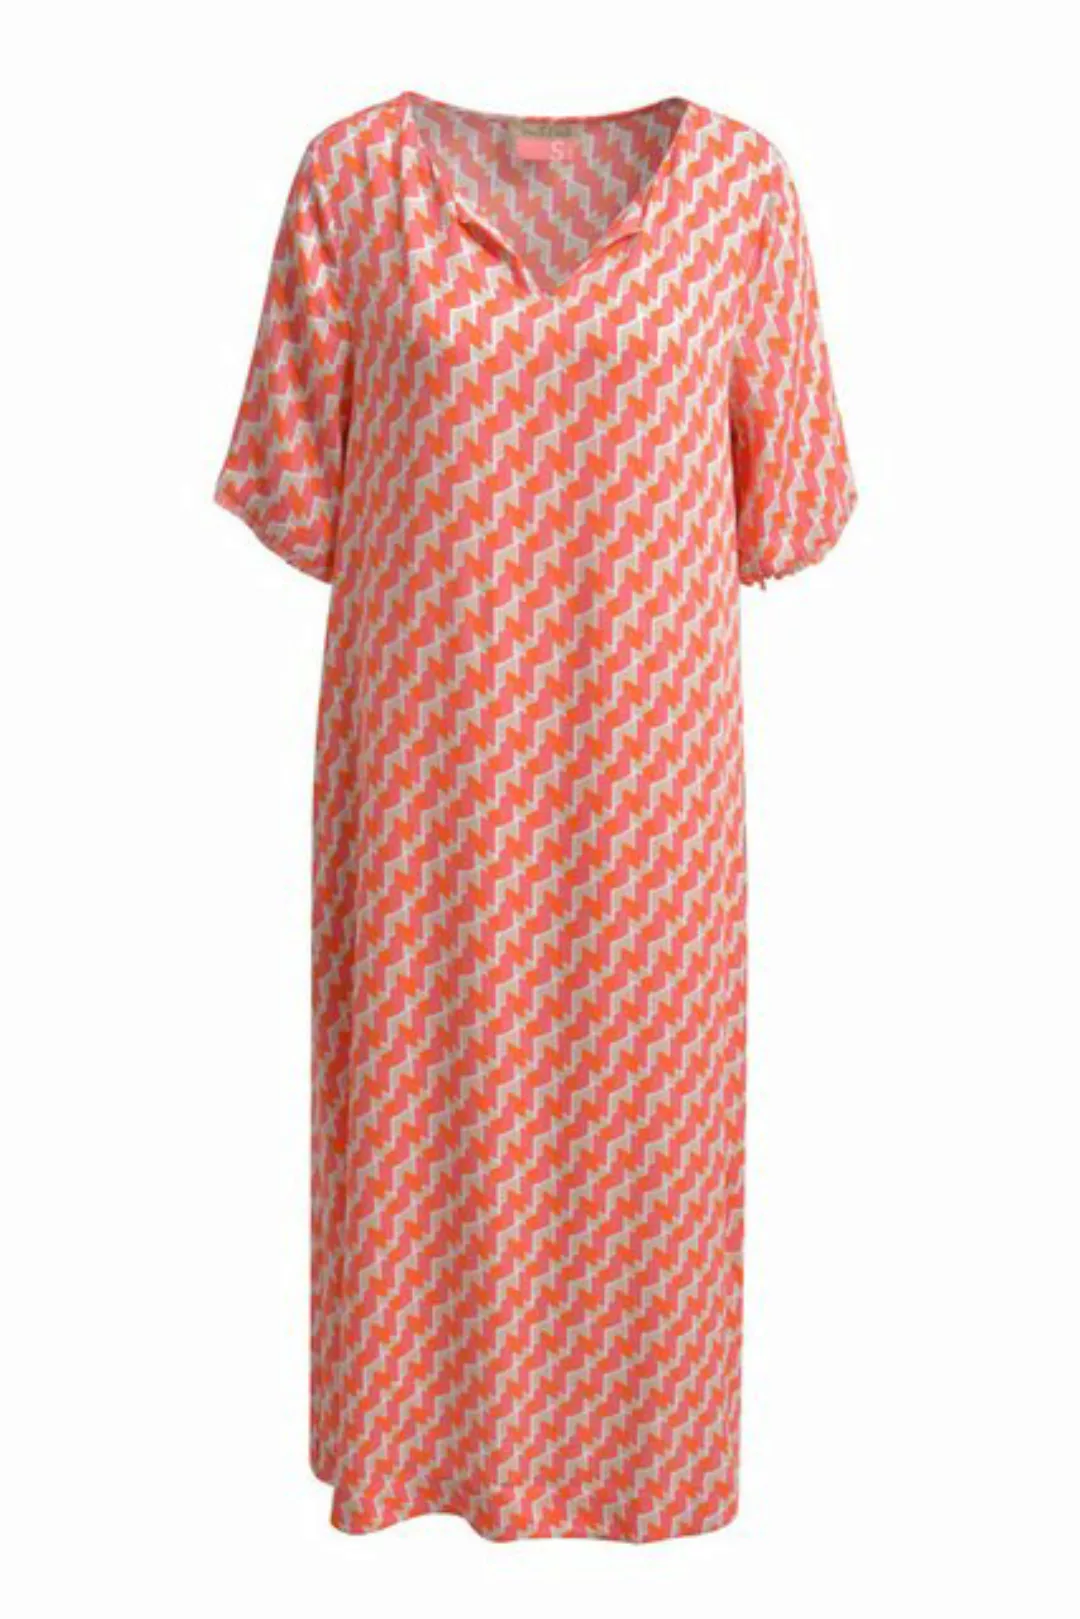 Smith & Soul Maxikleid Straight V-neck Dress with Fringes - oat milk print günstig online kaufen